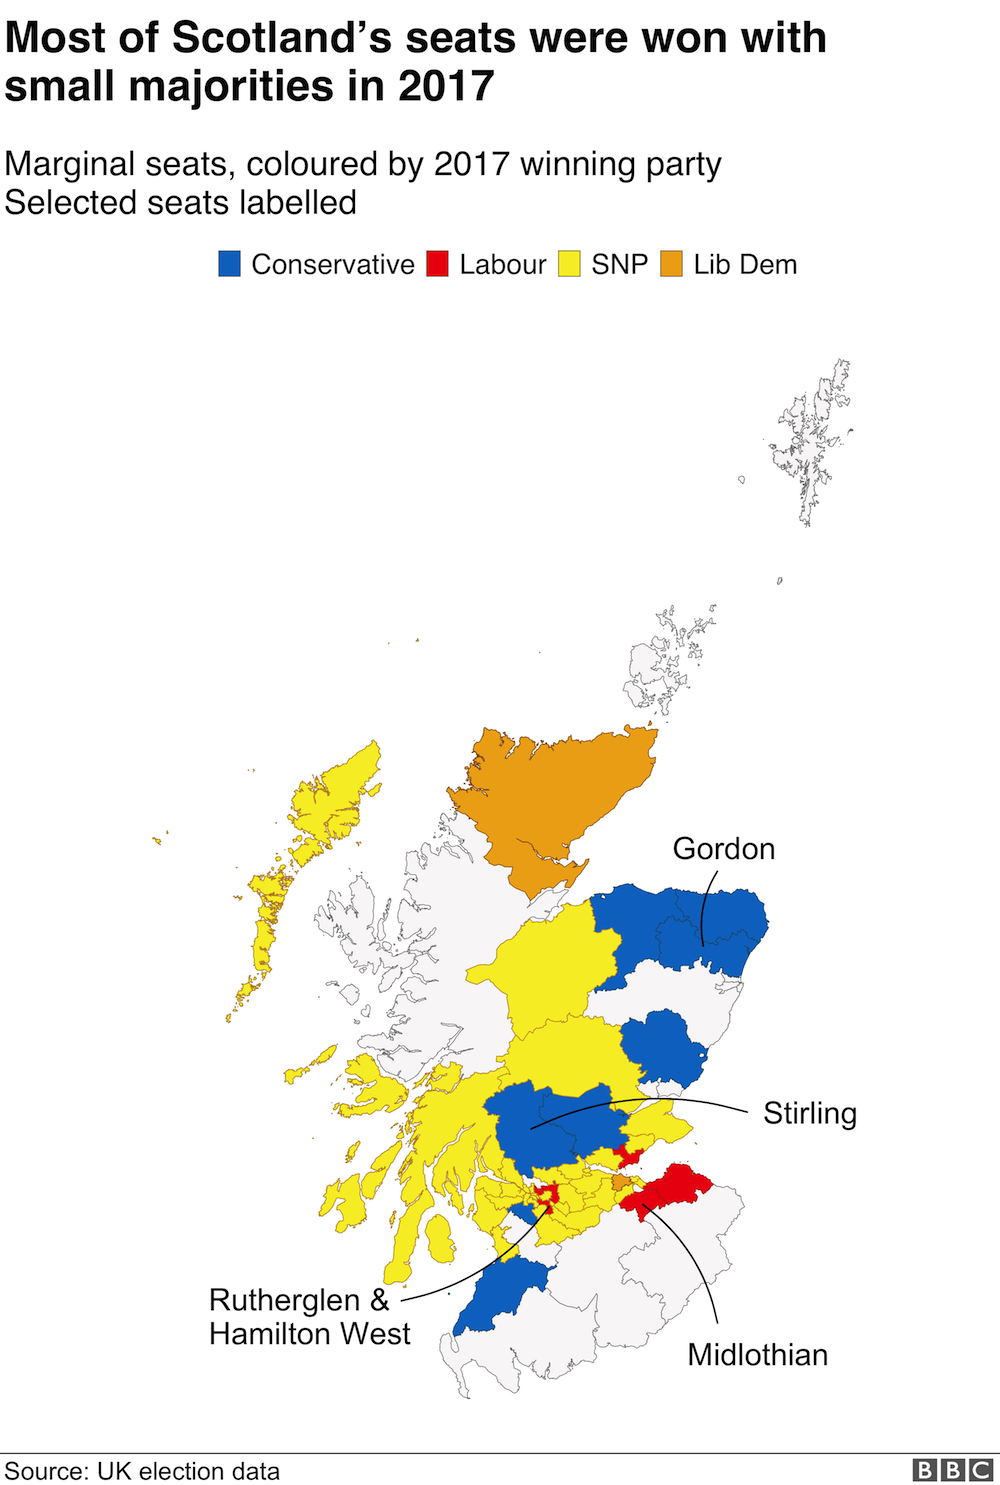 Scotland's marginal seats